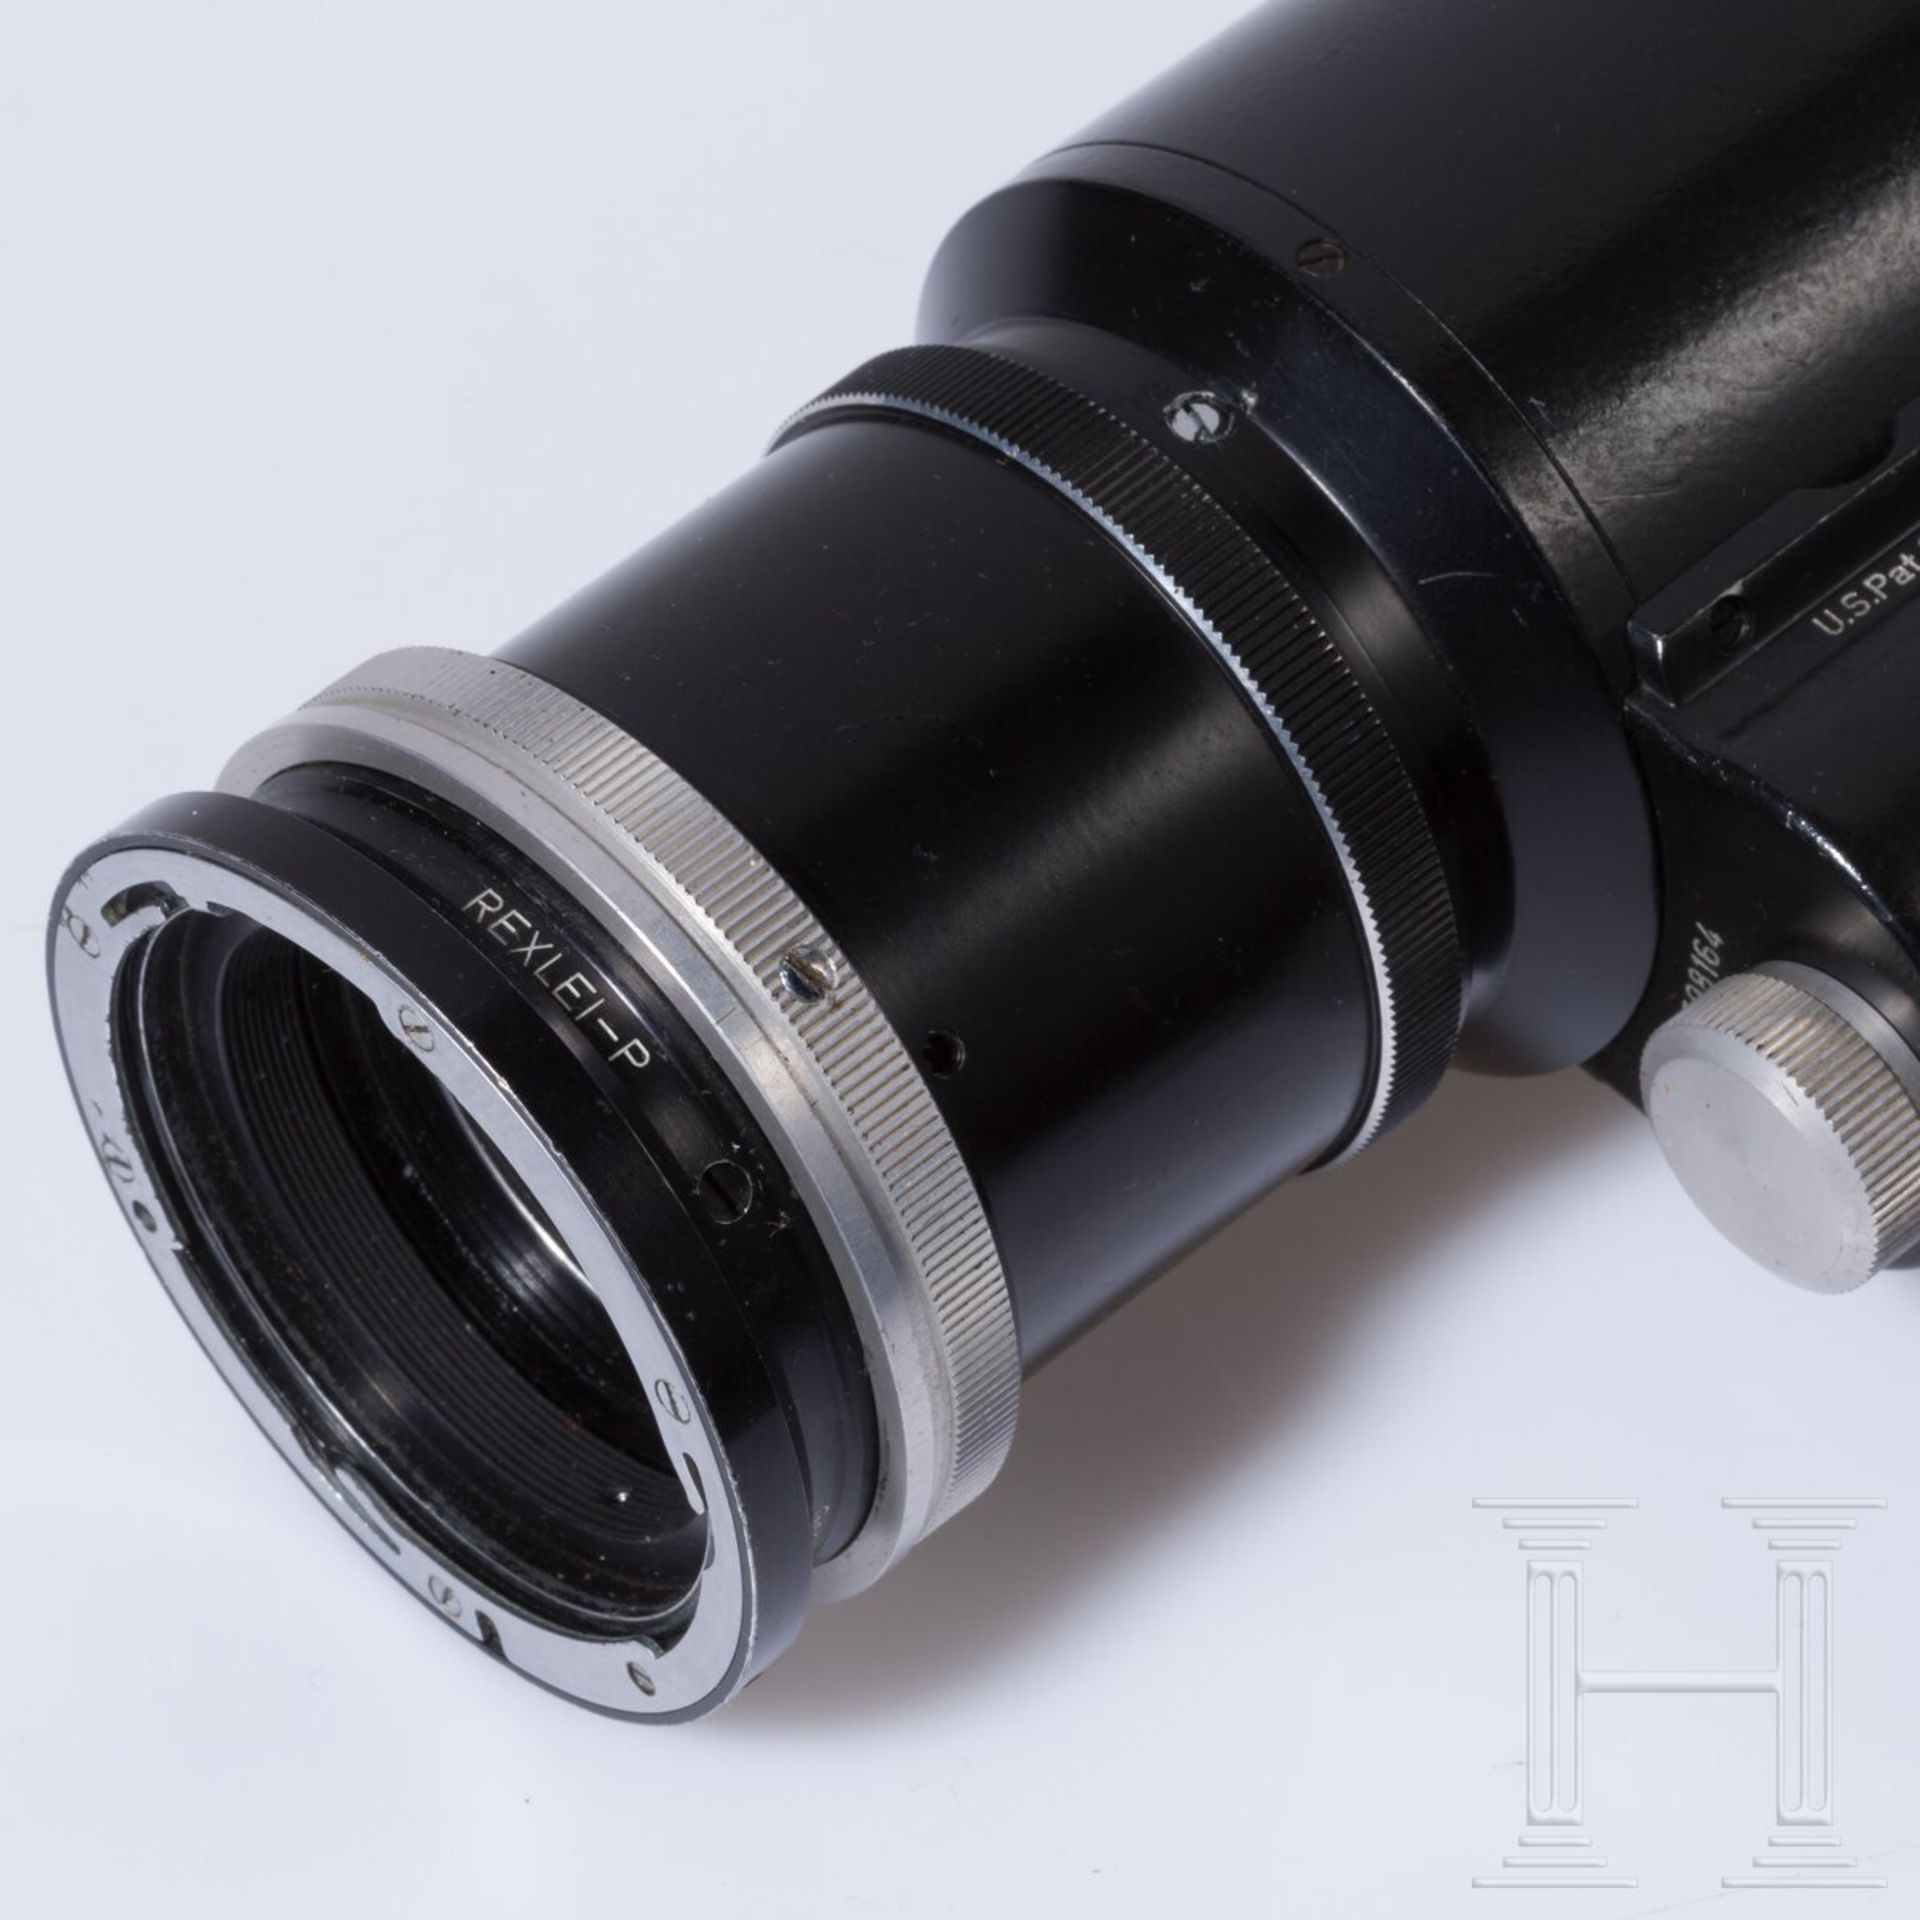 Novoflex-Schnellschuss-Objektiv Novoflexar 1:5,6 / 280 mm "Follow Focus Lense" - Image 2 of 4